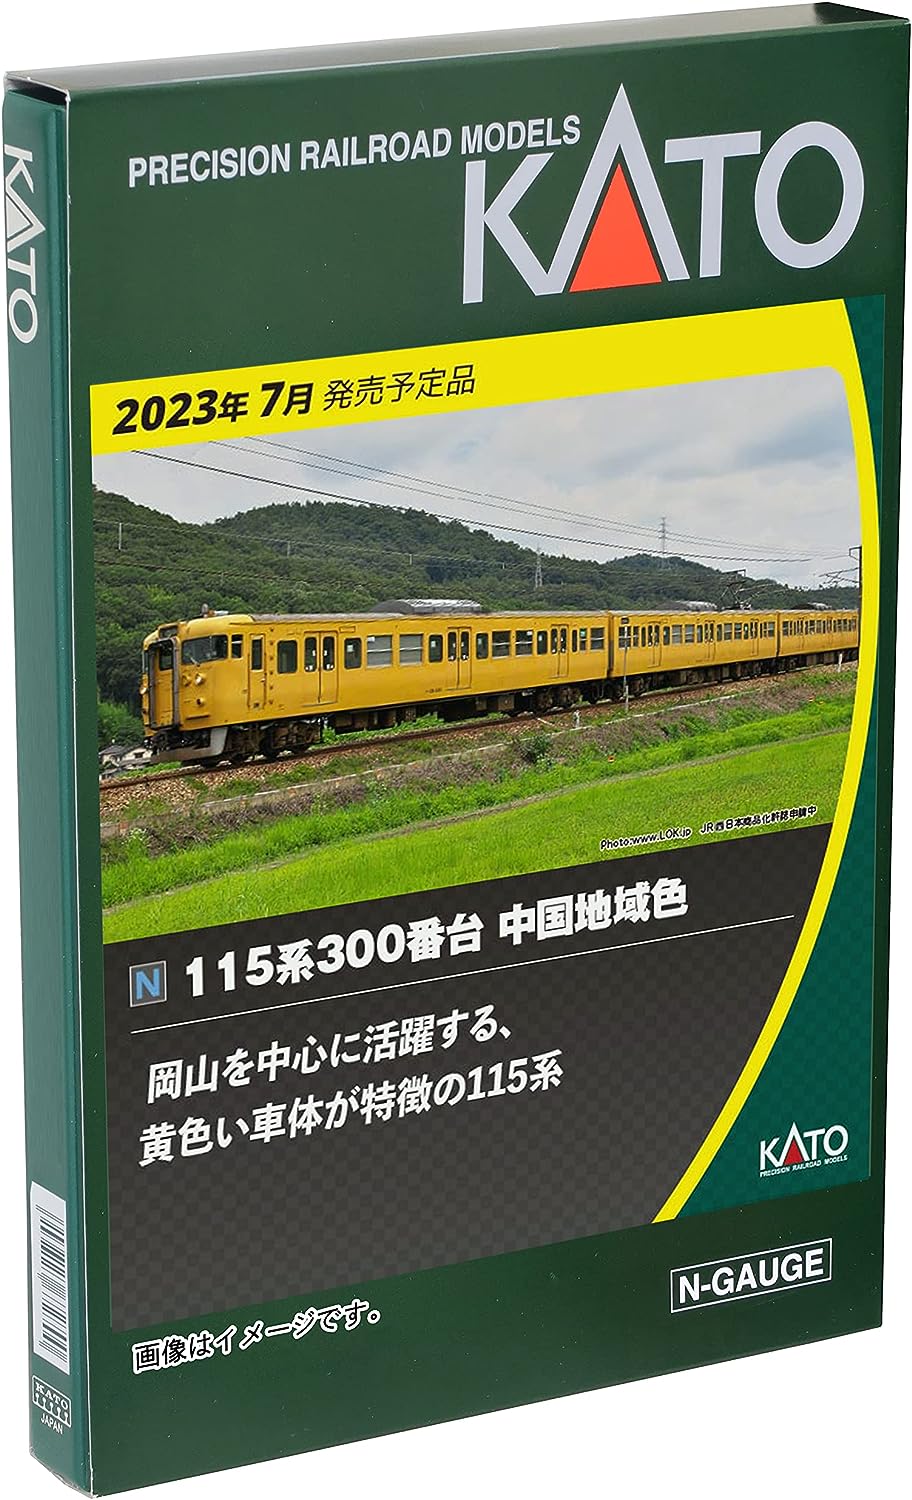 10-1808 Series 115-300 Chugoku Area Color Three Car Set (3-Car Set)